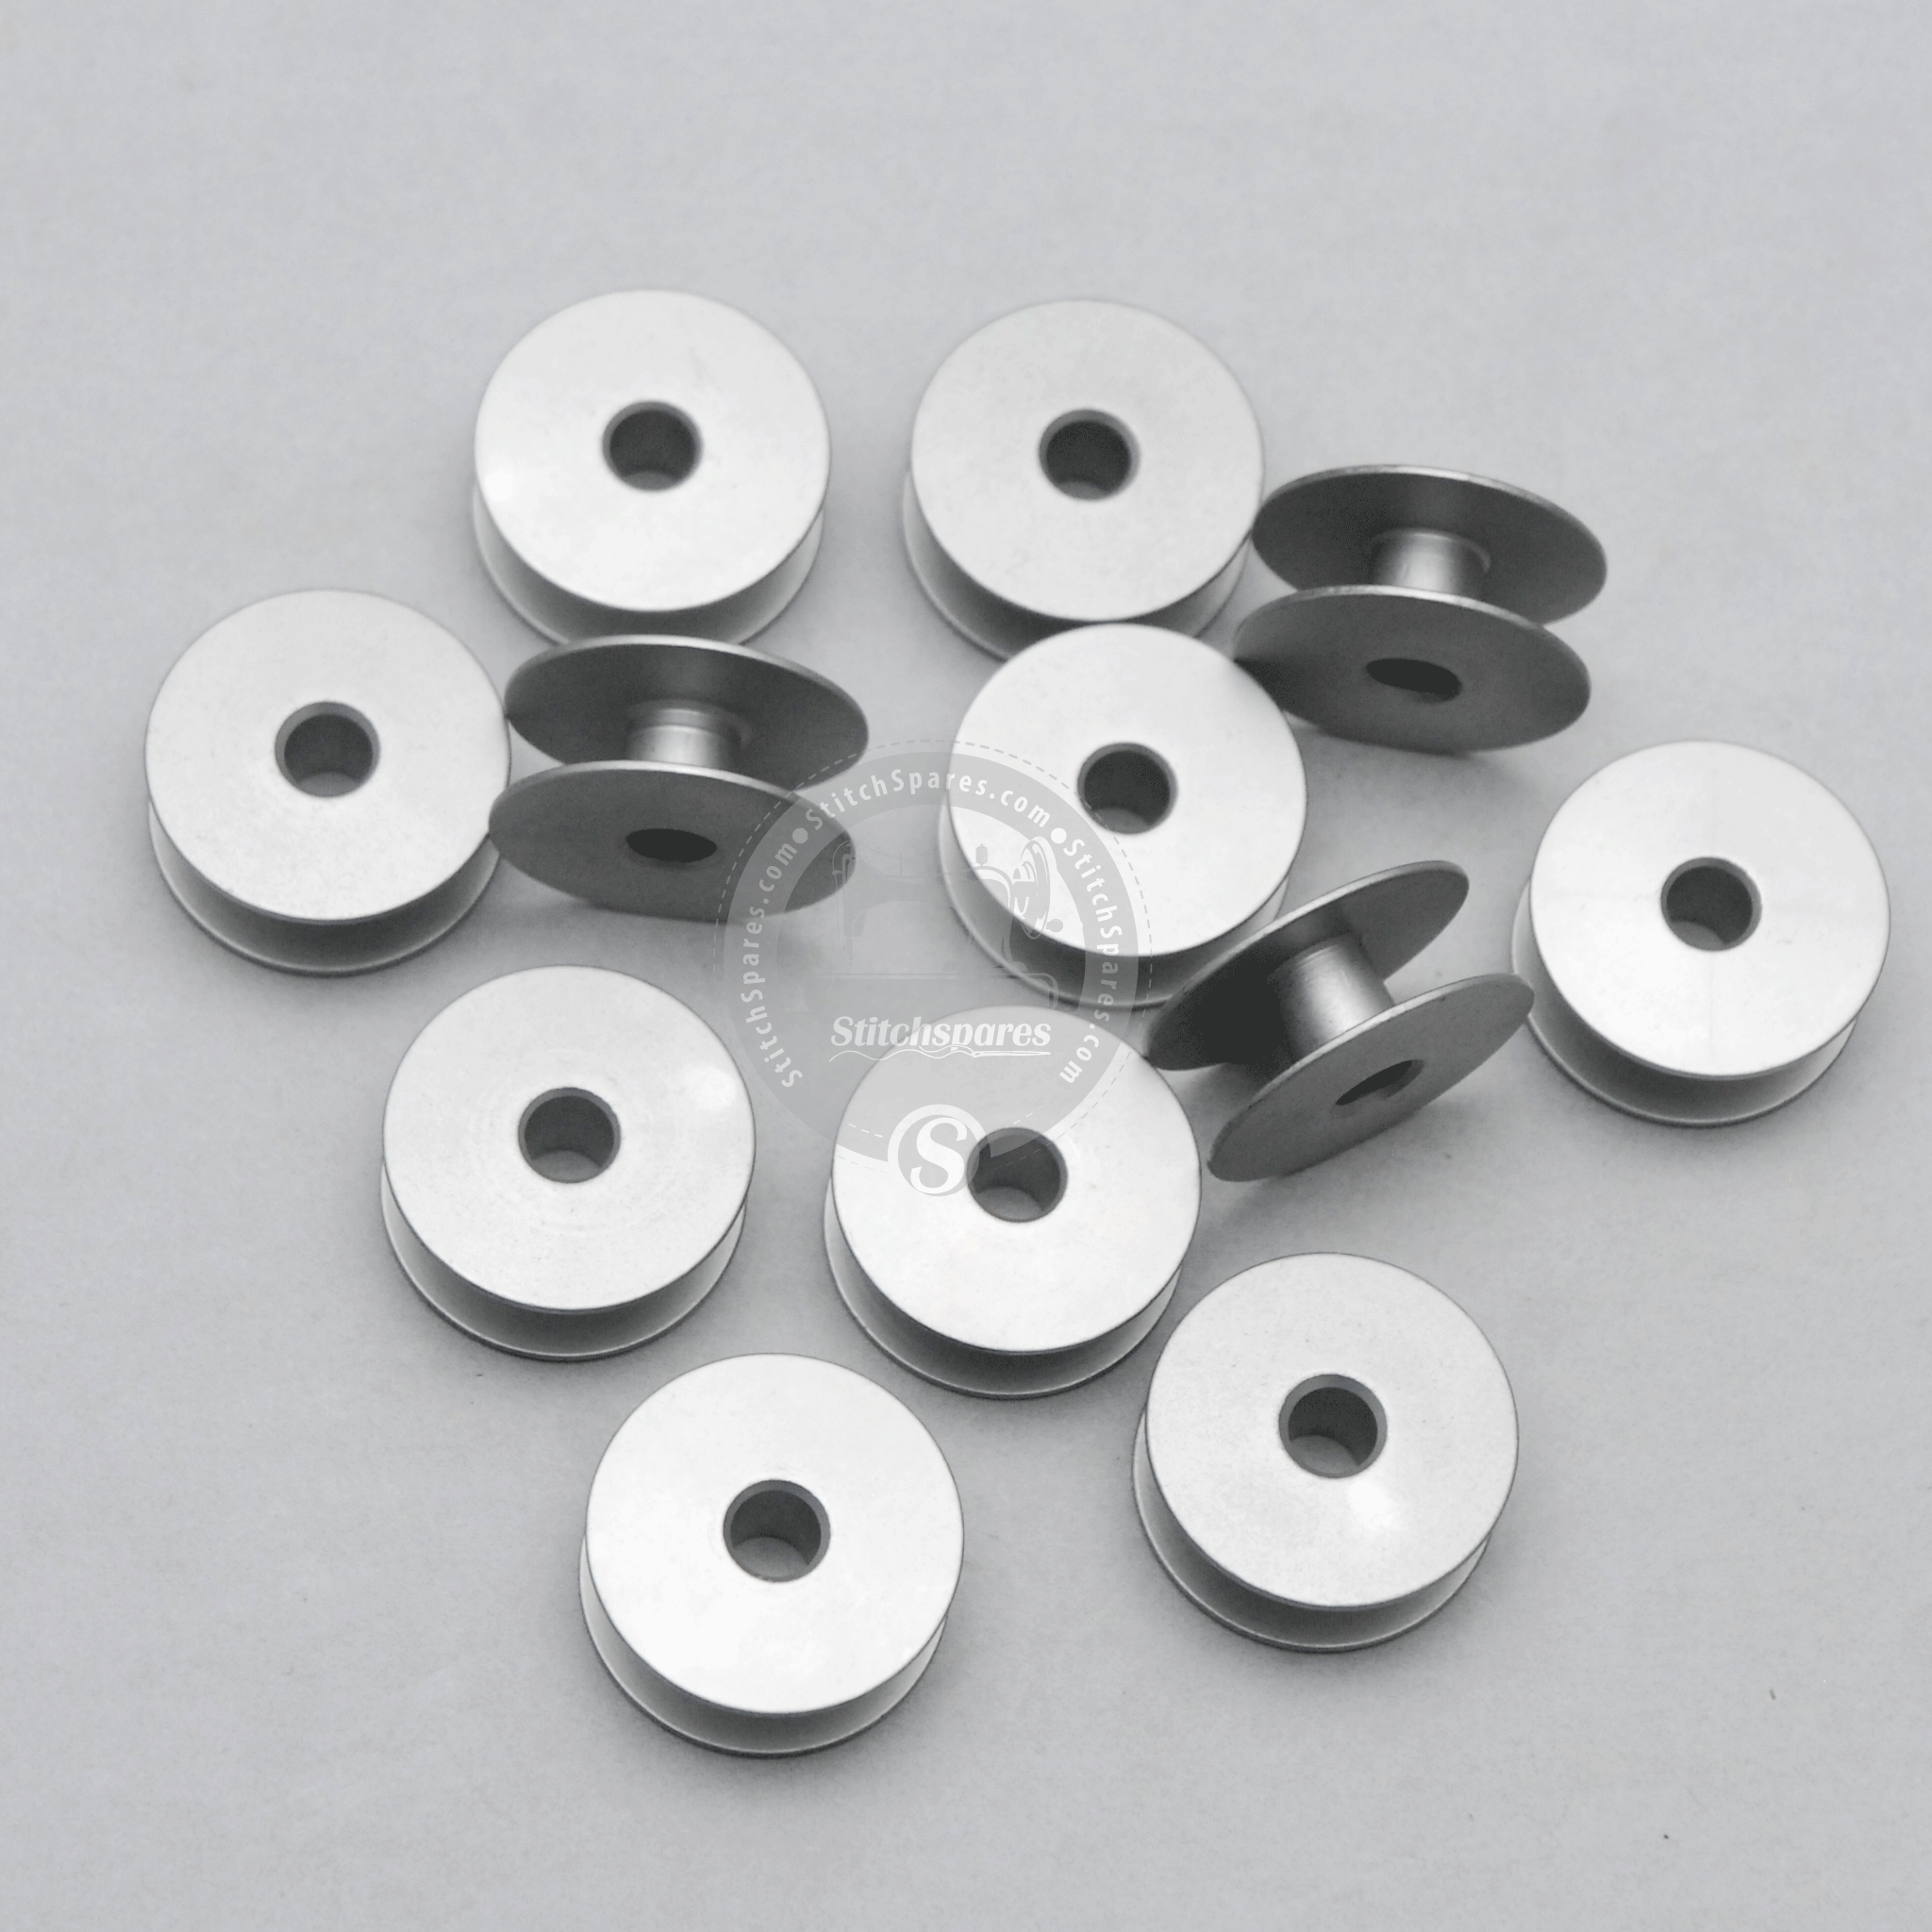 Spule (18034A) GROSSER HAKEN Aluminium